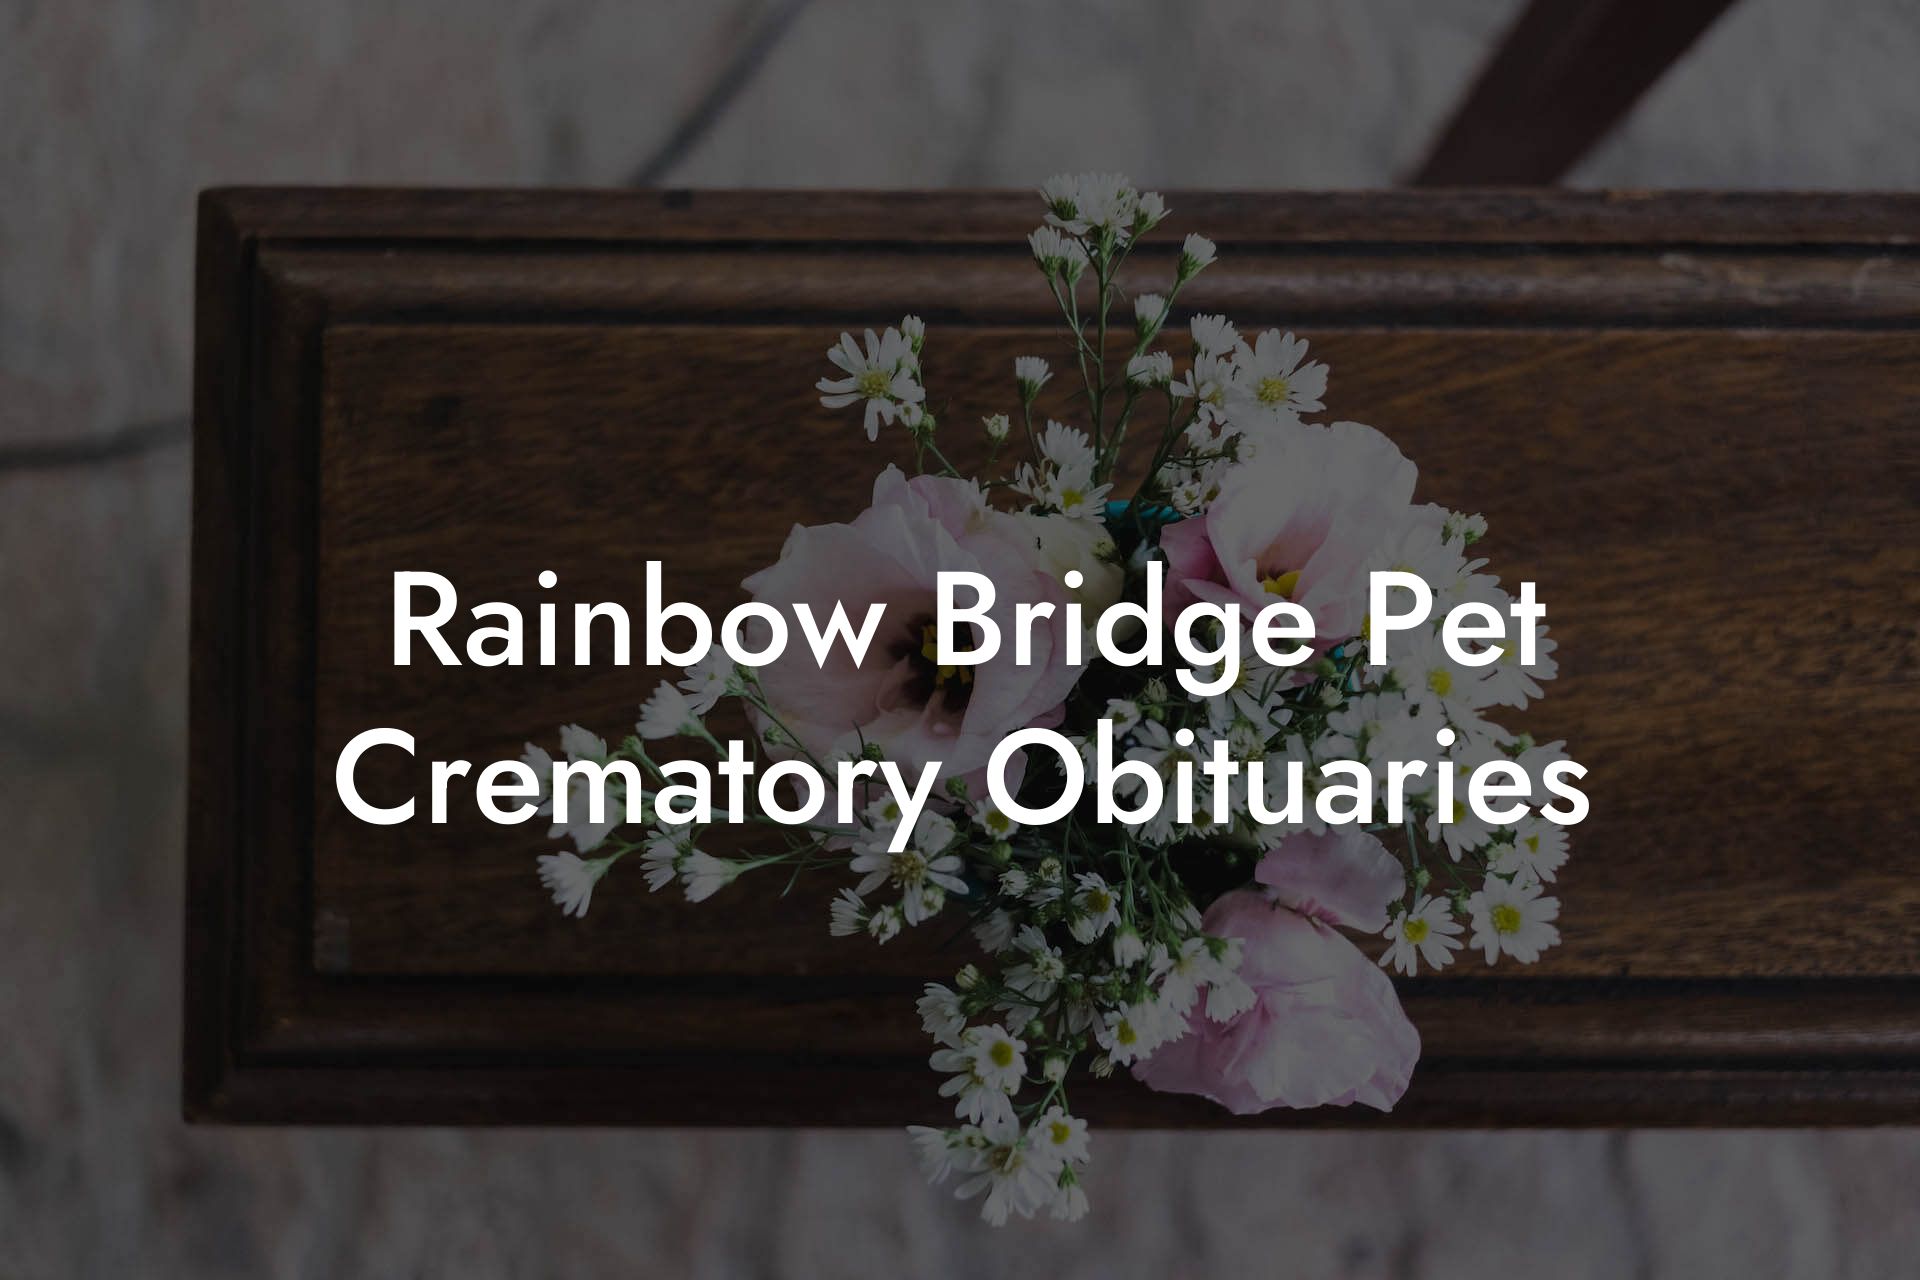 Rainbow Bridge Pet Crematory Obituaries